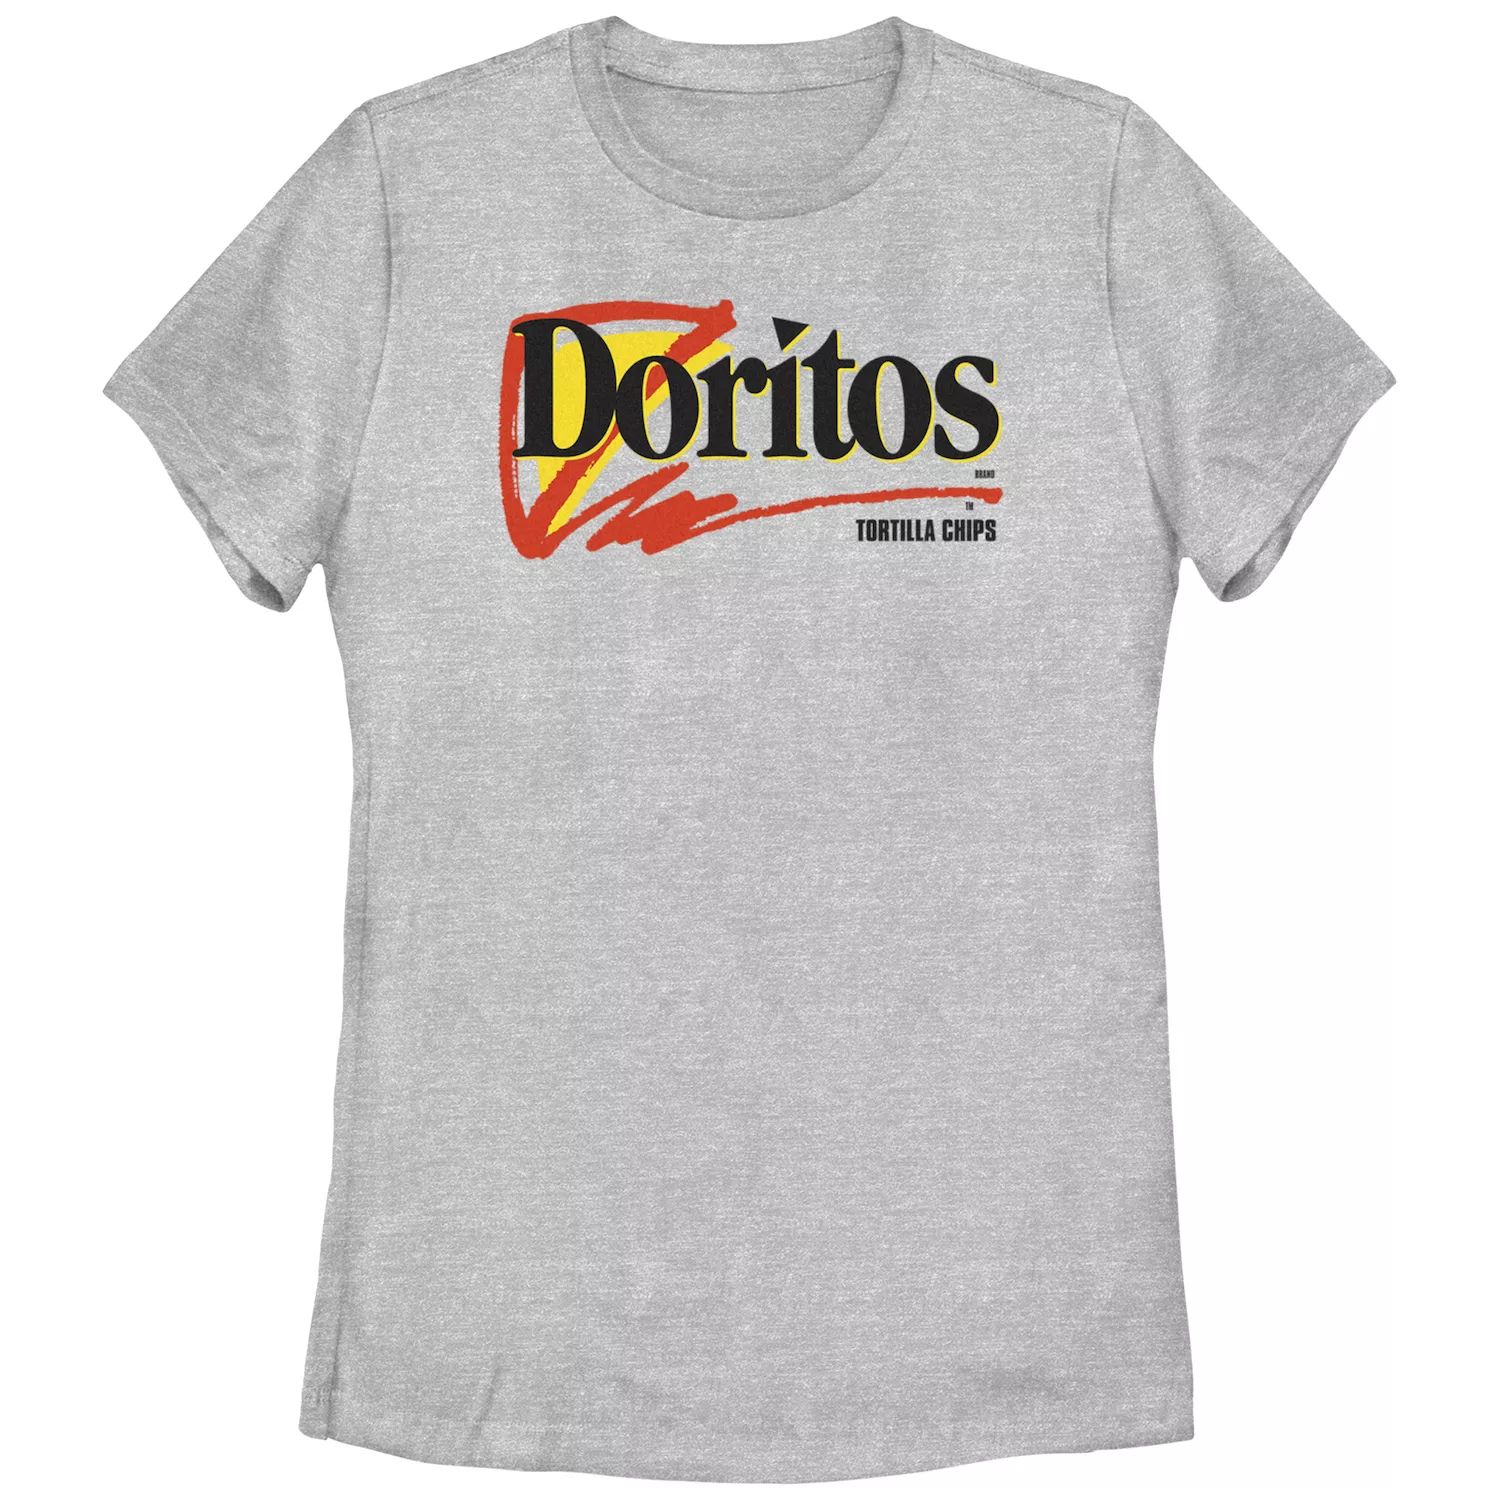 Детская футболка с логотипом Doritos Tortilla Chips и графическим рисунком Doritos мужская футболка doritos tortilla chips flavors licensed character